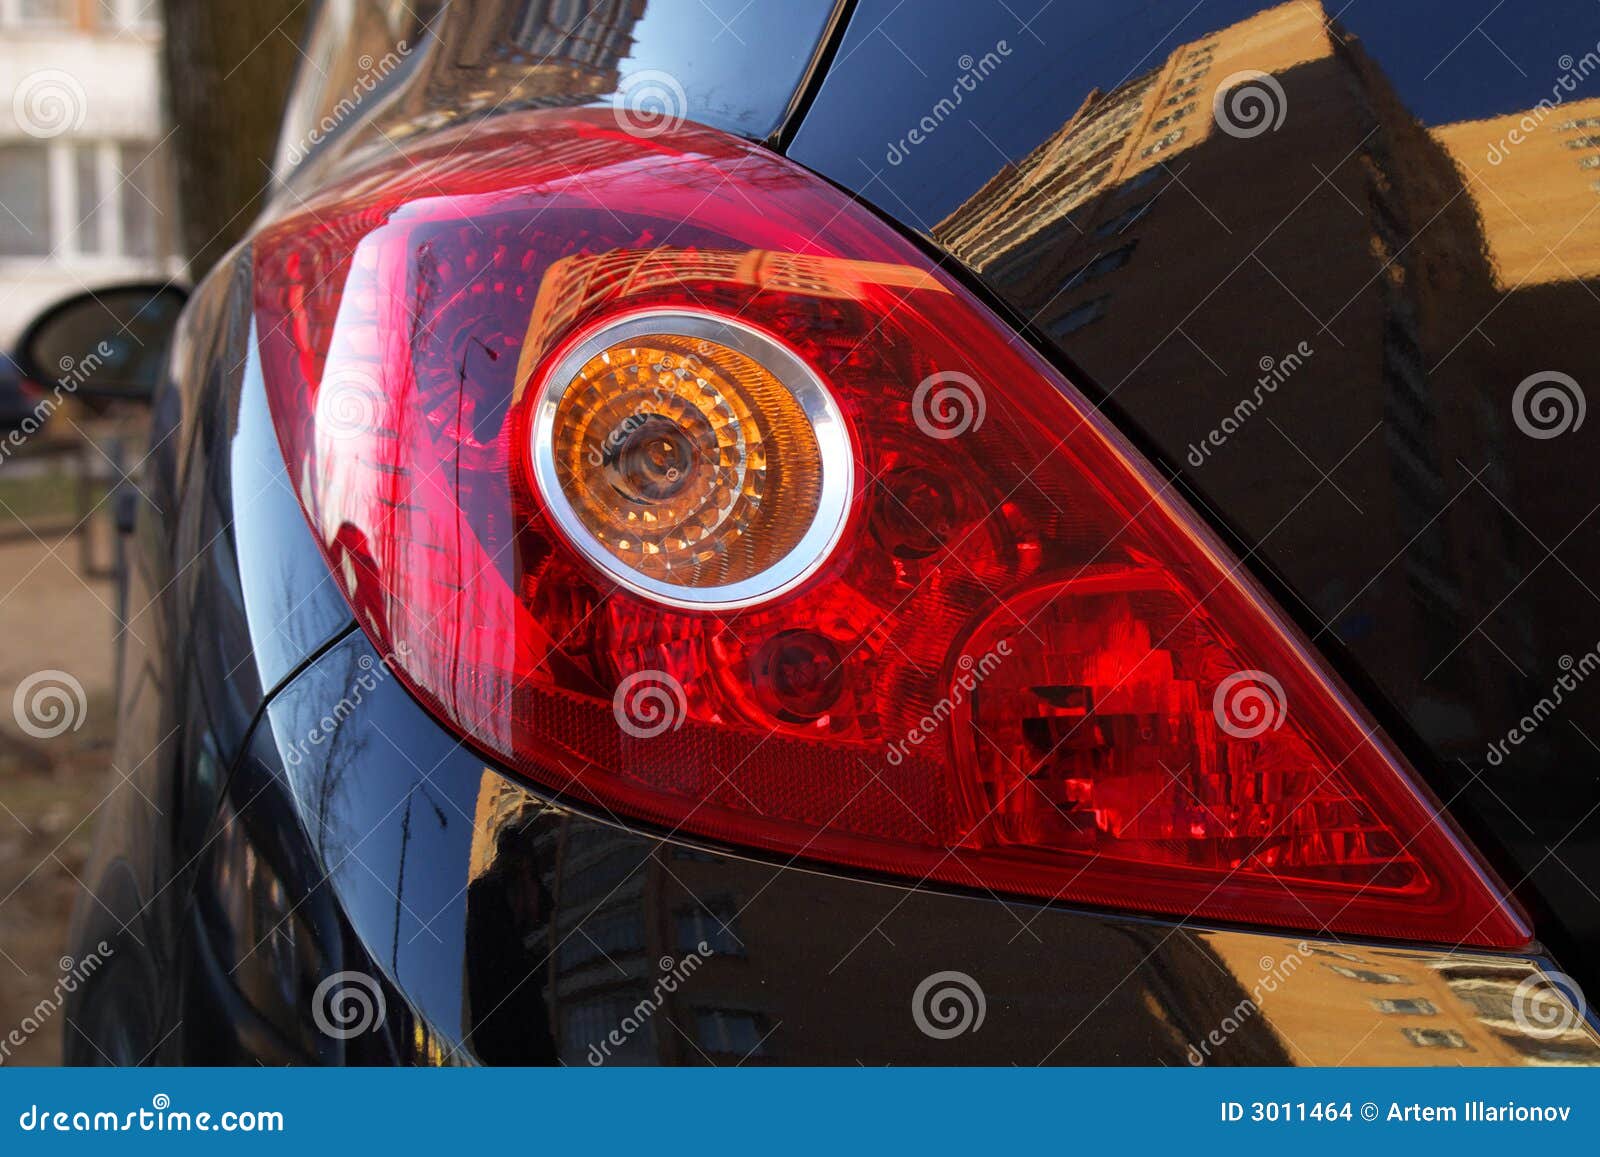 Car U0026 39 S Backlight Stock Images